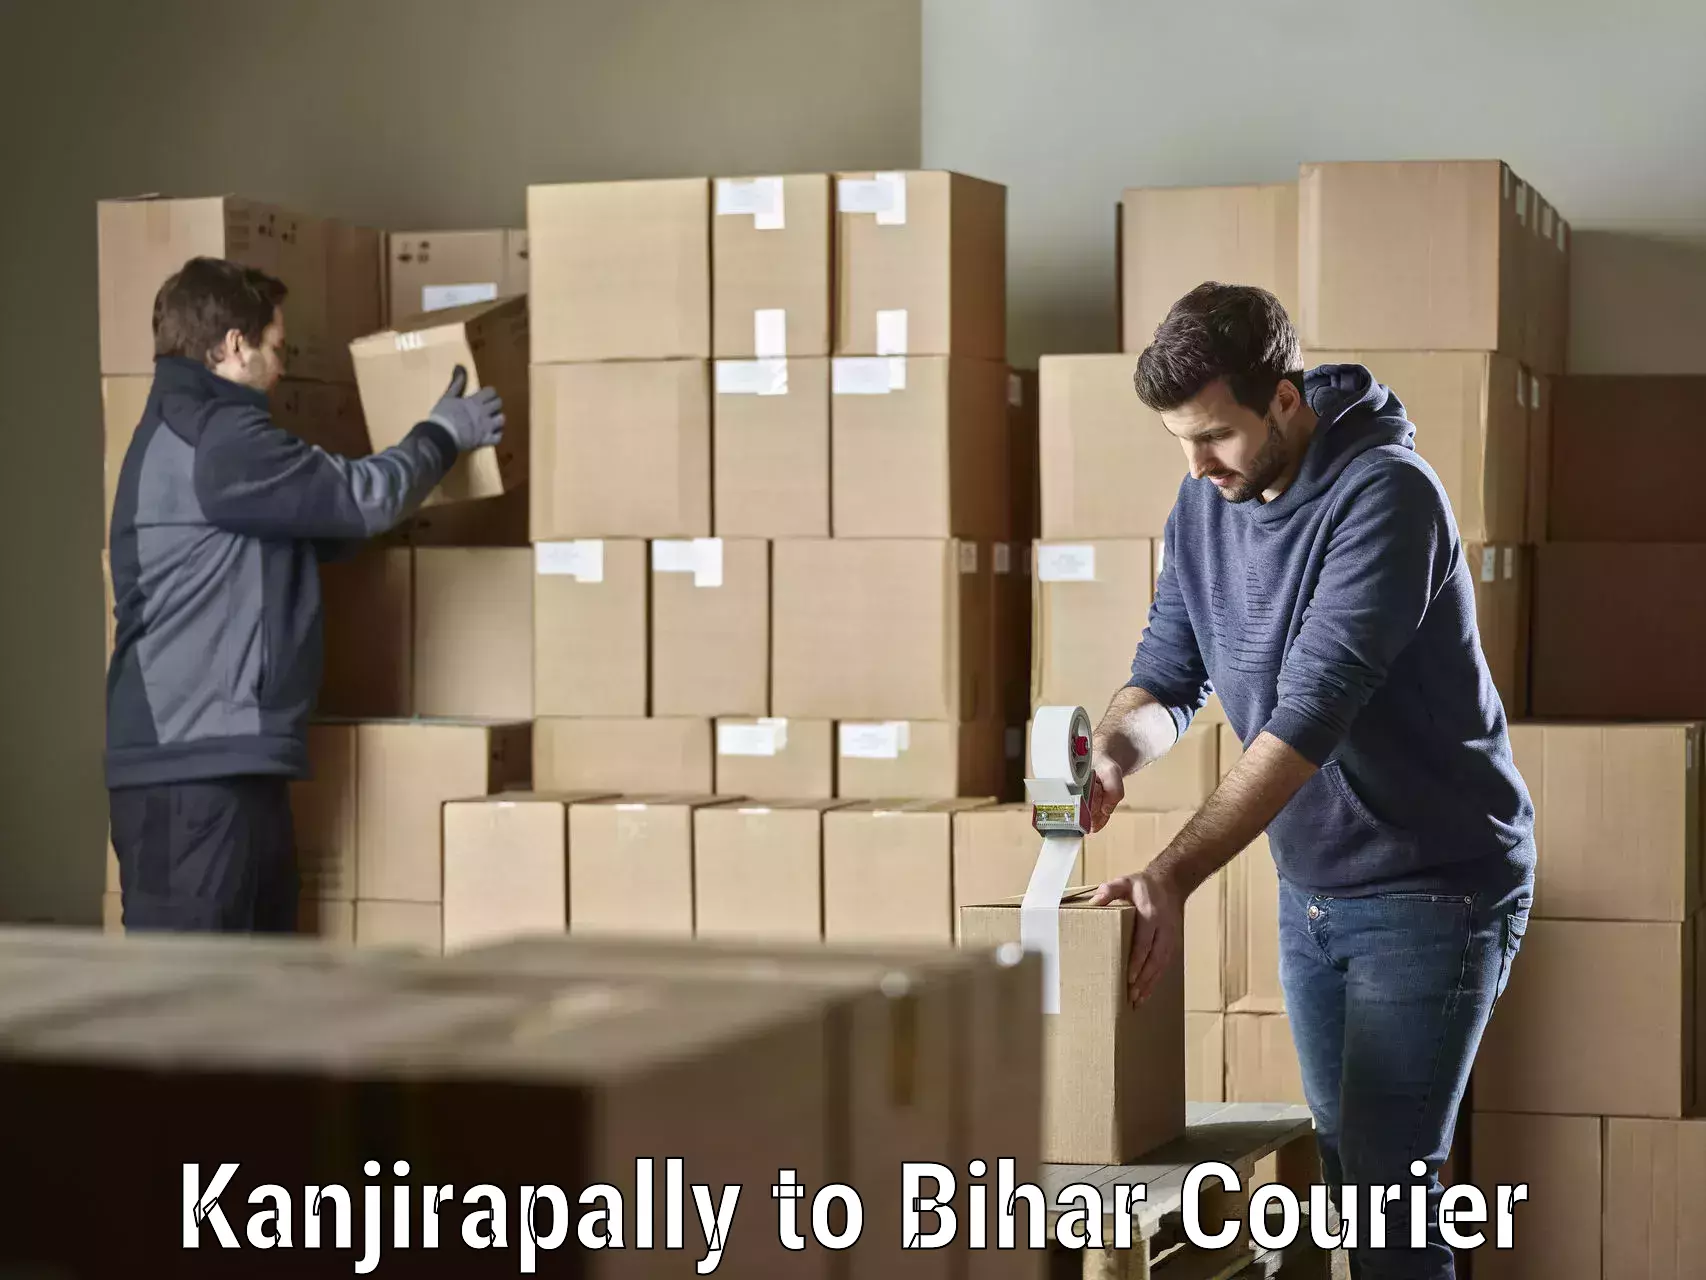 Courier service innovation Kanjirapally to Bettiah